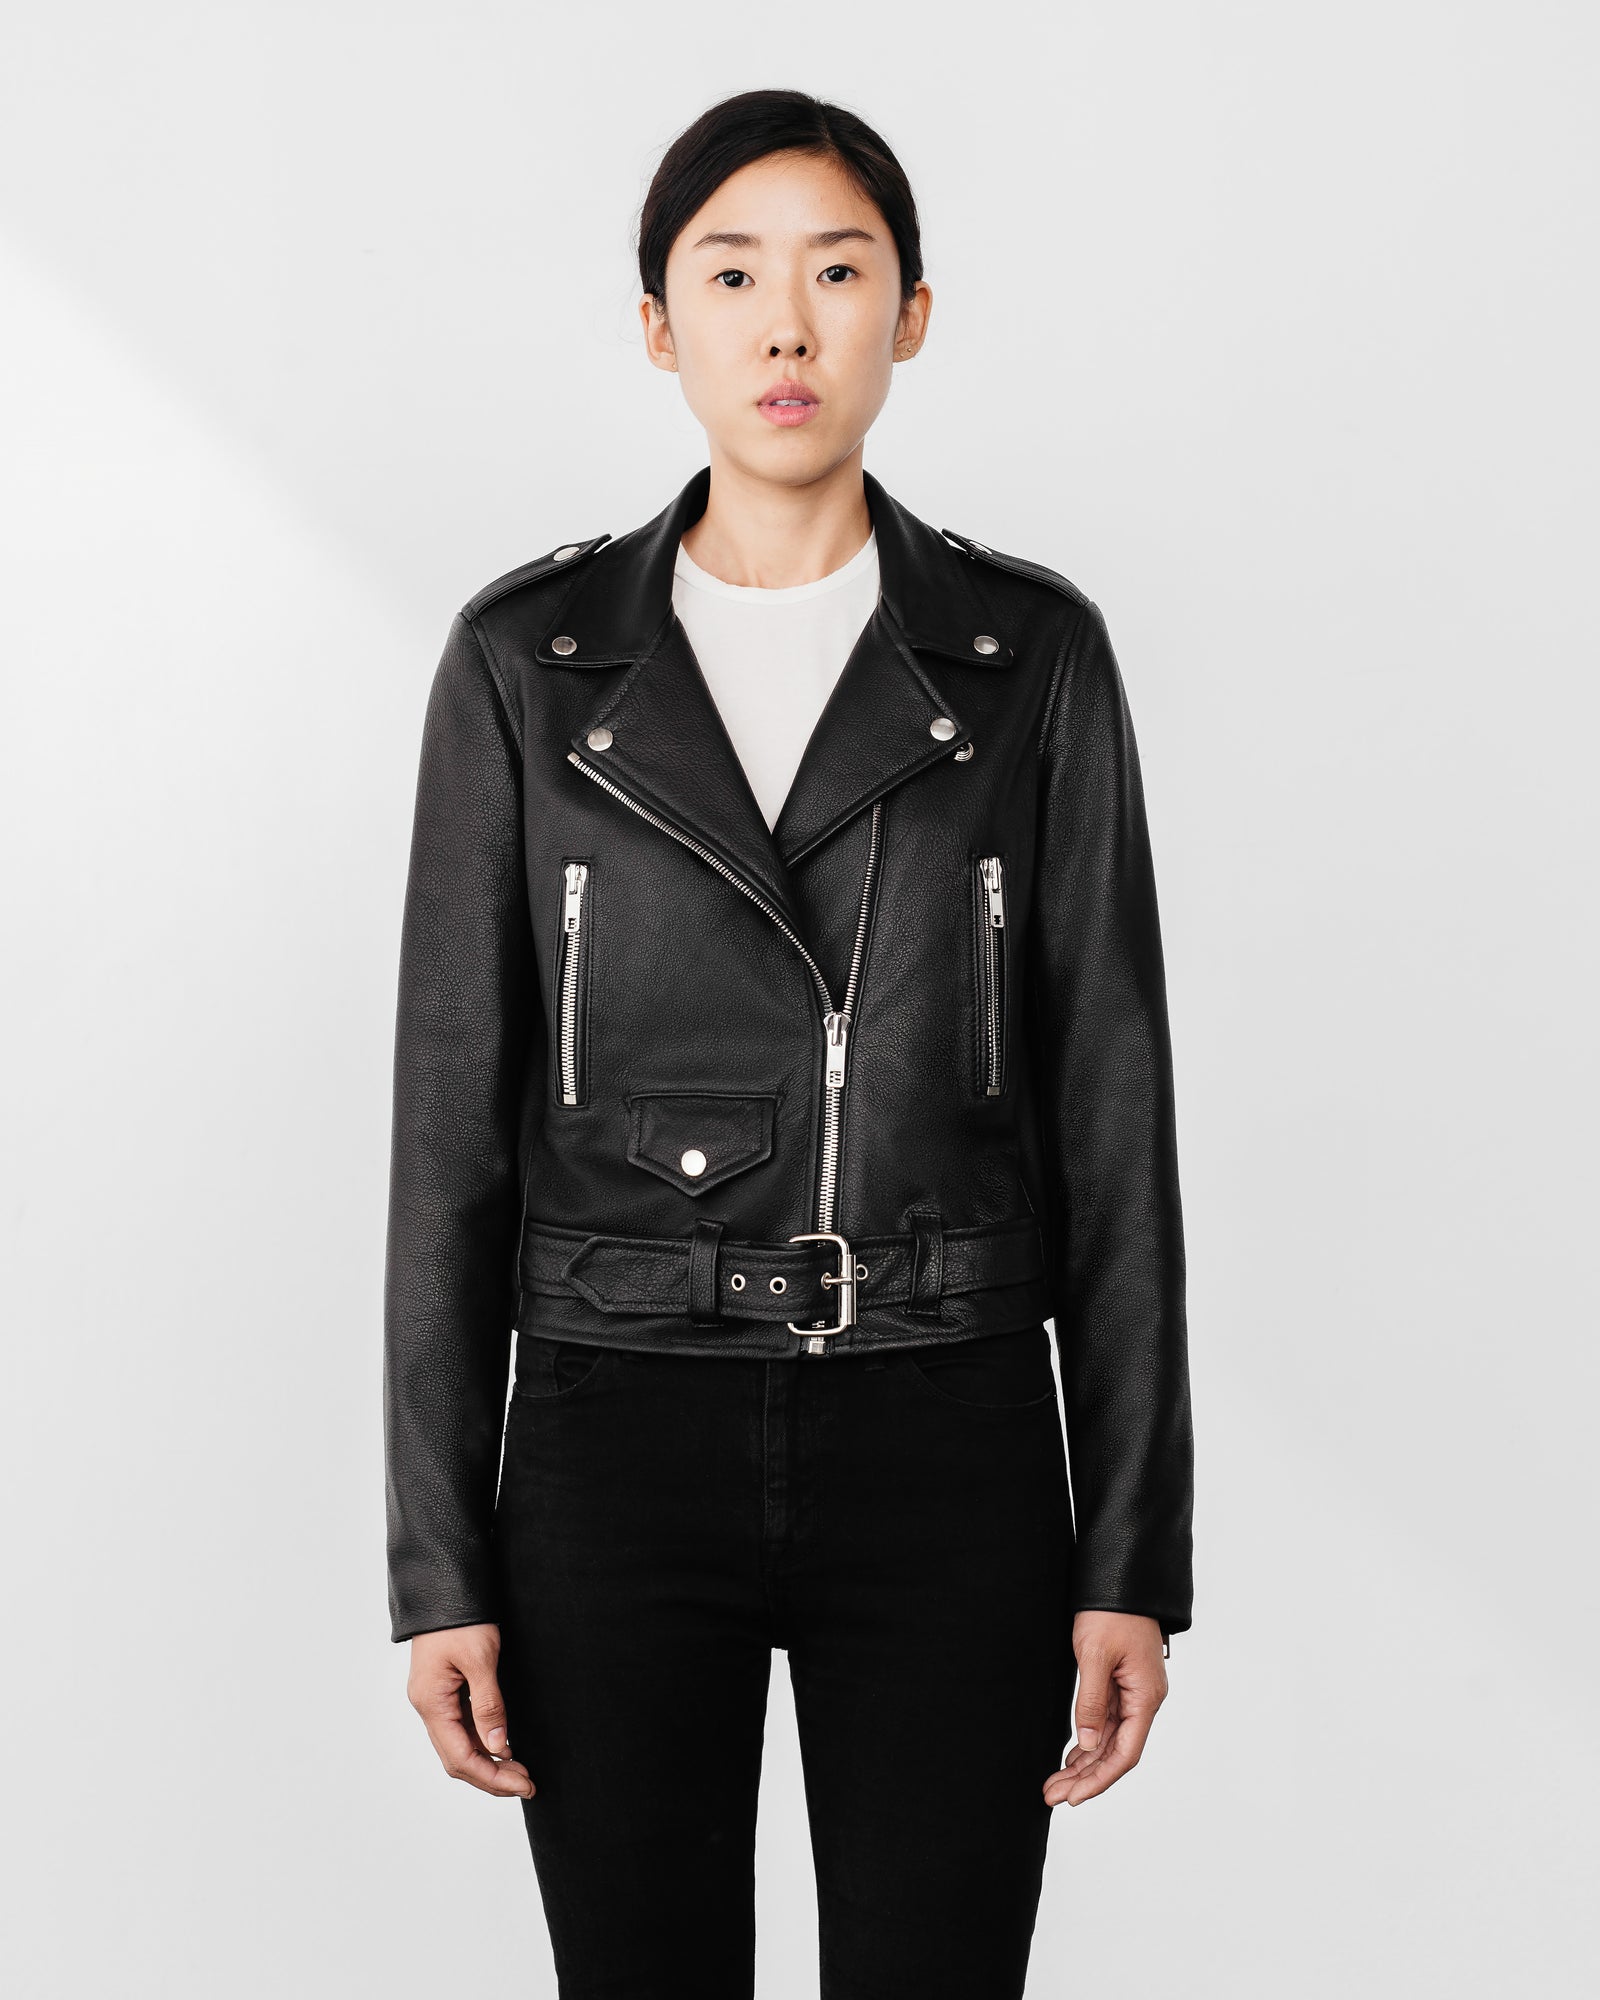 New Standard Women's Leather Jacket | Laer Brand